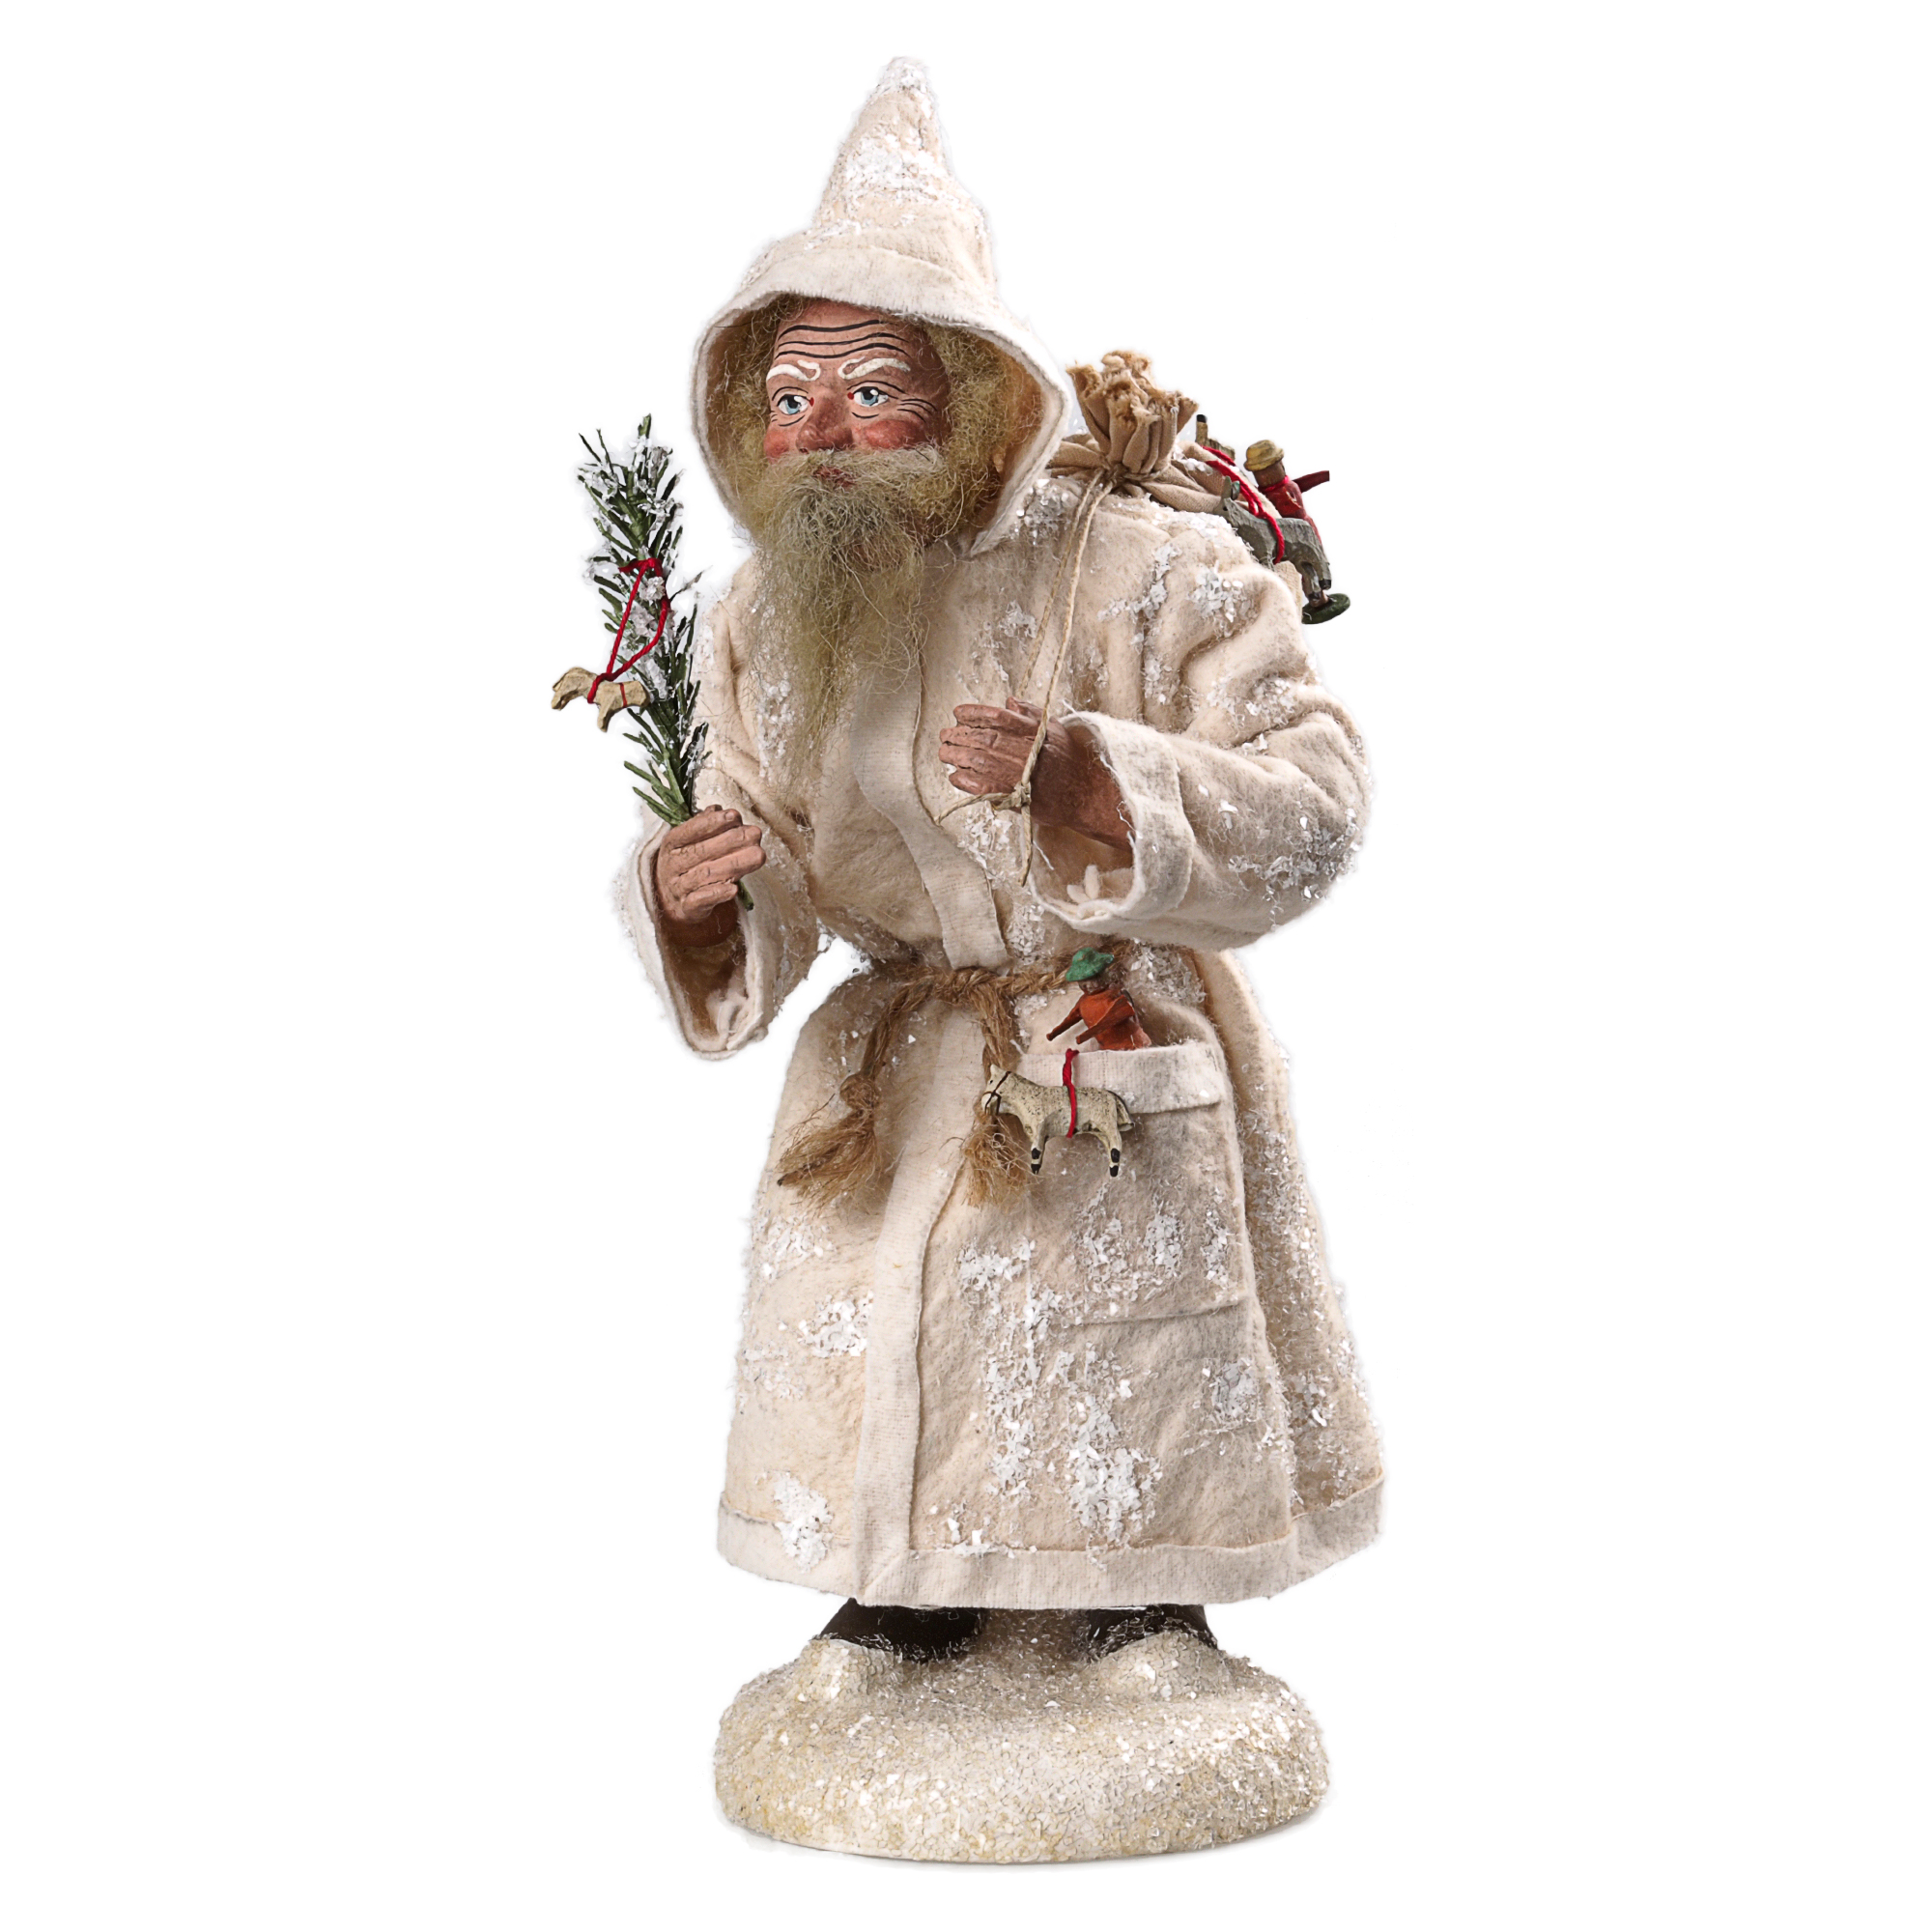 Dressed Santa with a white felt coat